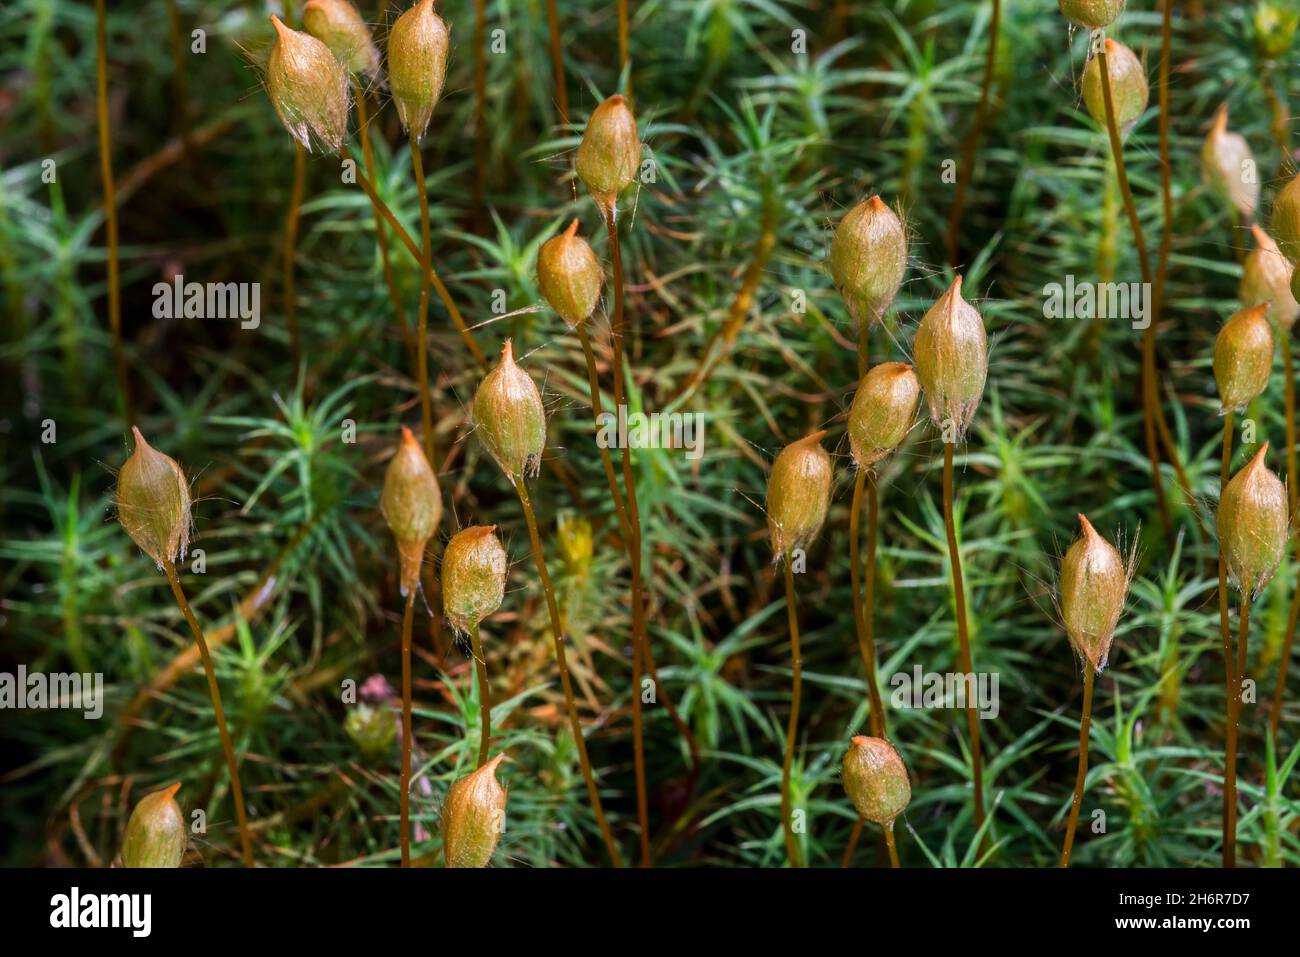 Juniper haircap / juniper polytrichum moss (Polytrichum juniperinum / Polytrichum alpestre) close-up showing sporophytes Stock Photo